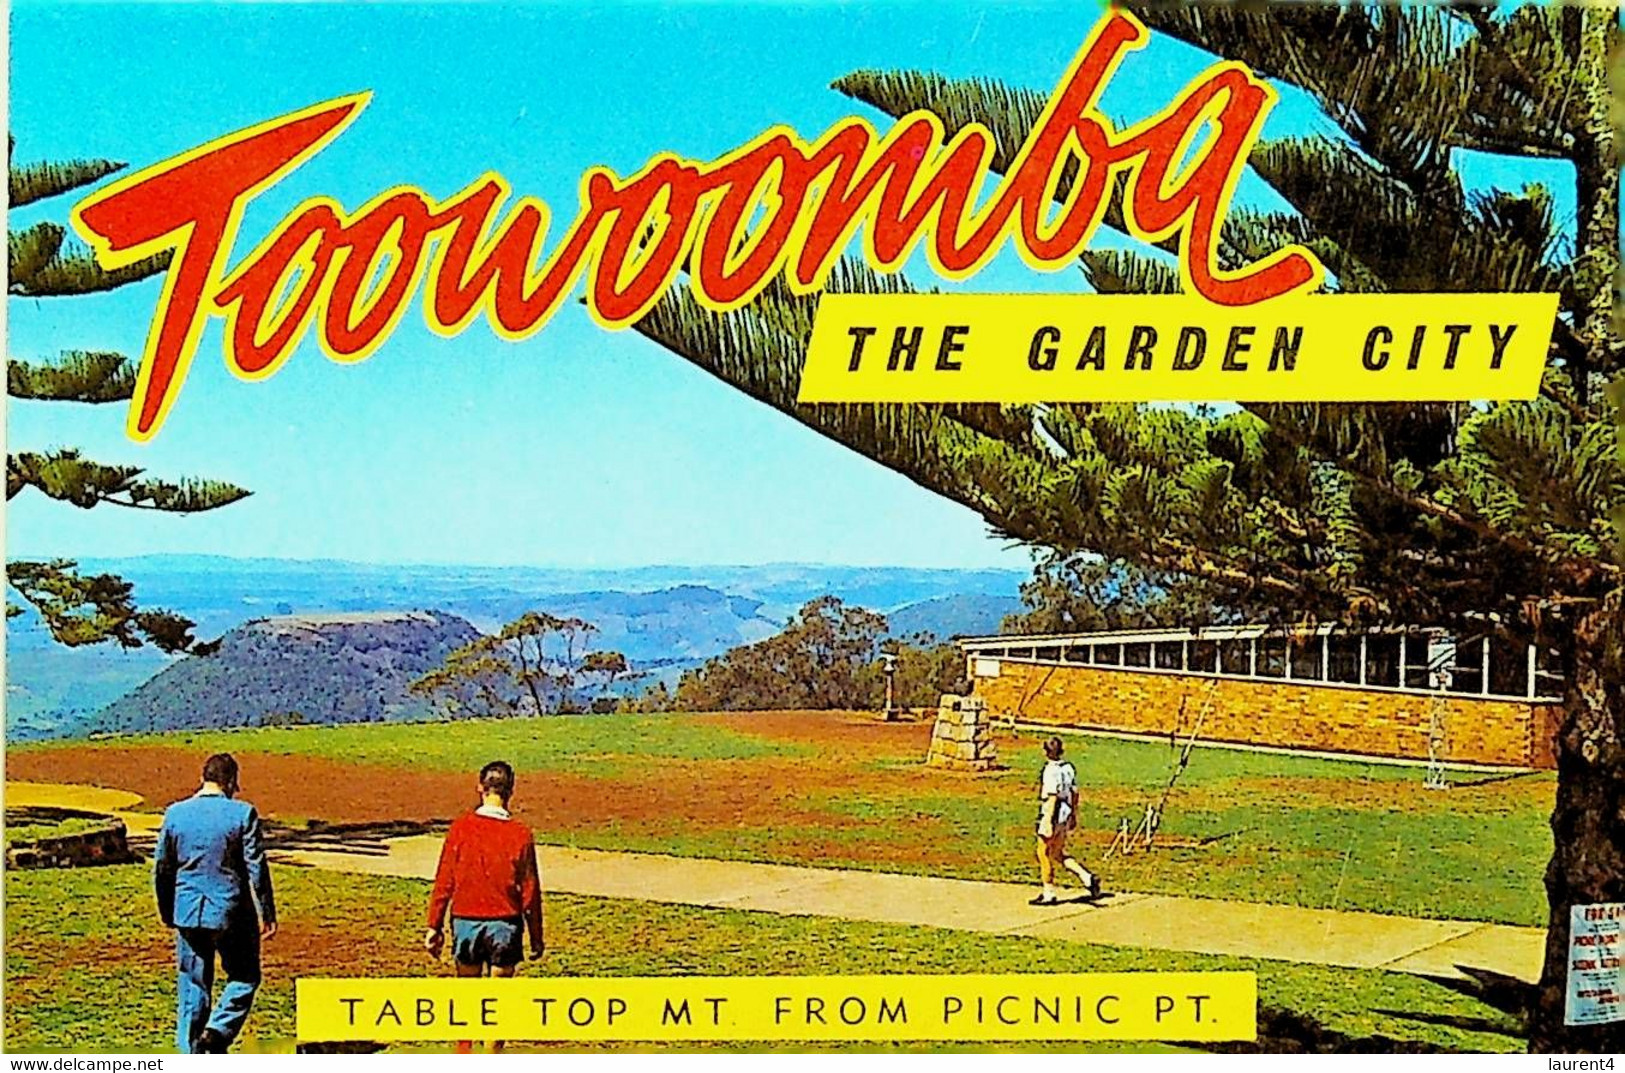 (Booklet 133 - 14-6-2021) Australia - QLD - Toowoomba - Towoomba / Darling Downs